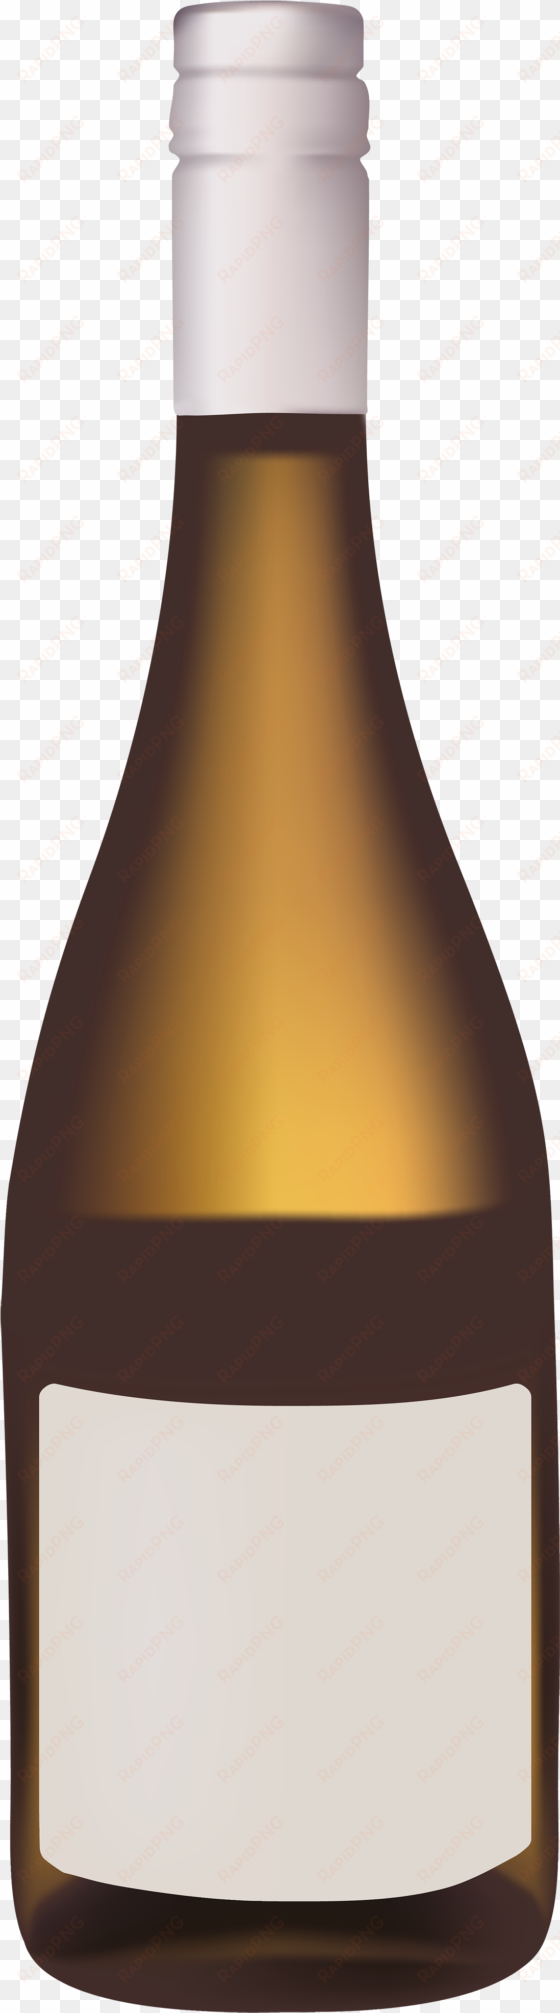 gold wine bottle png clipart - wine bottle clipart png